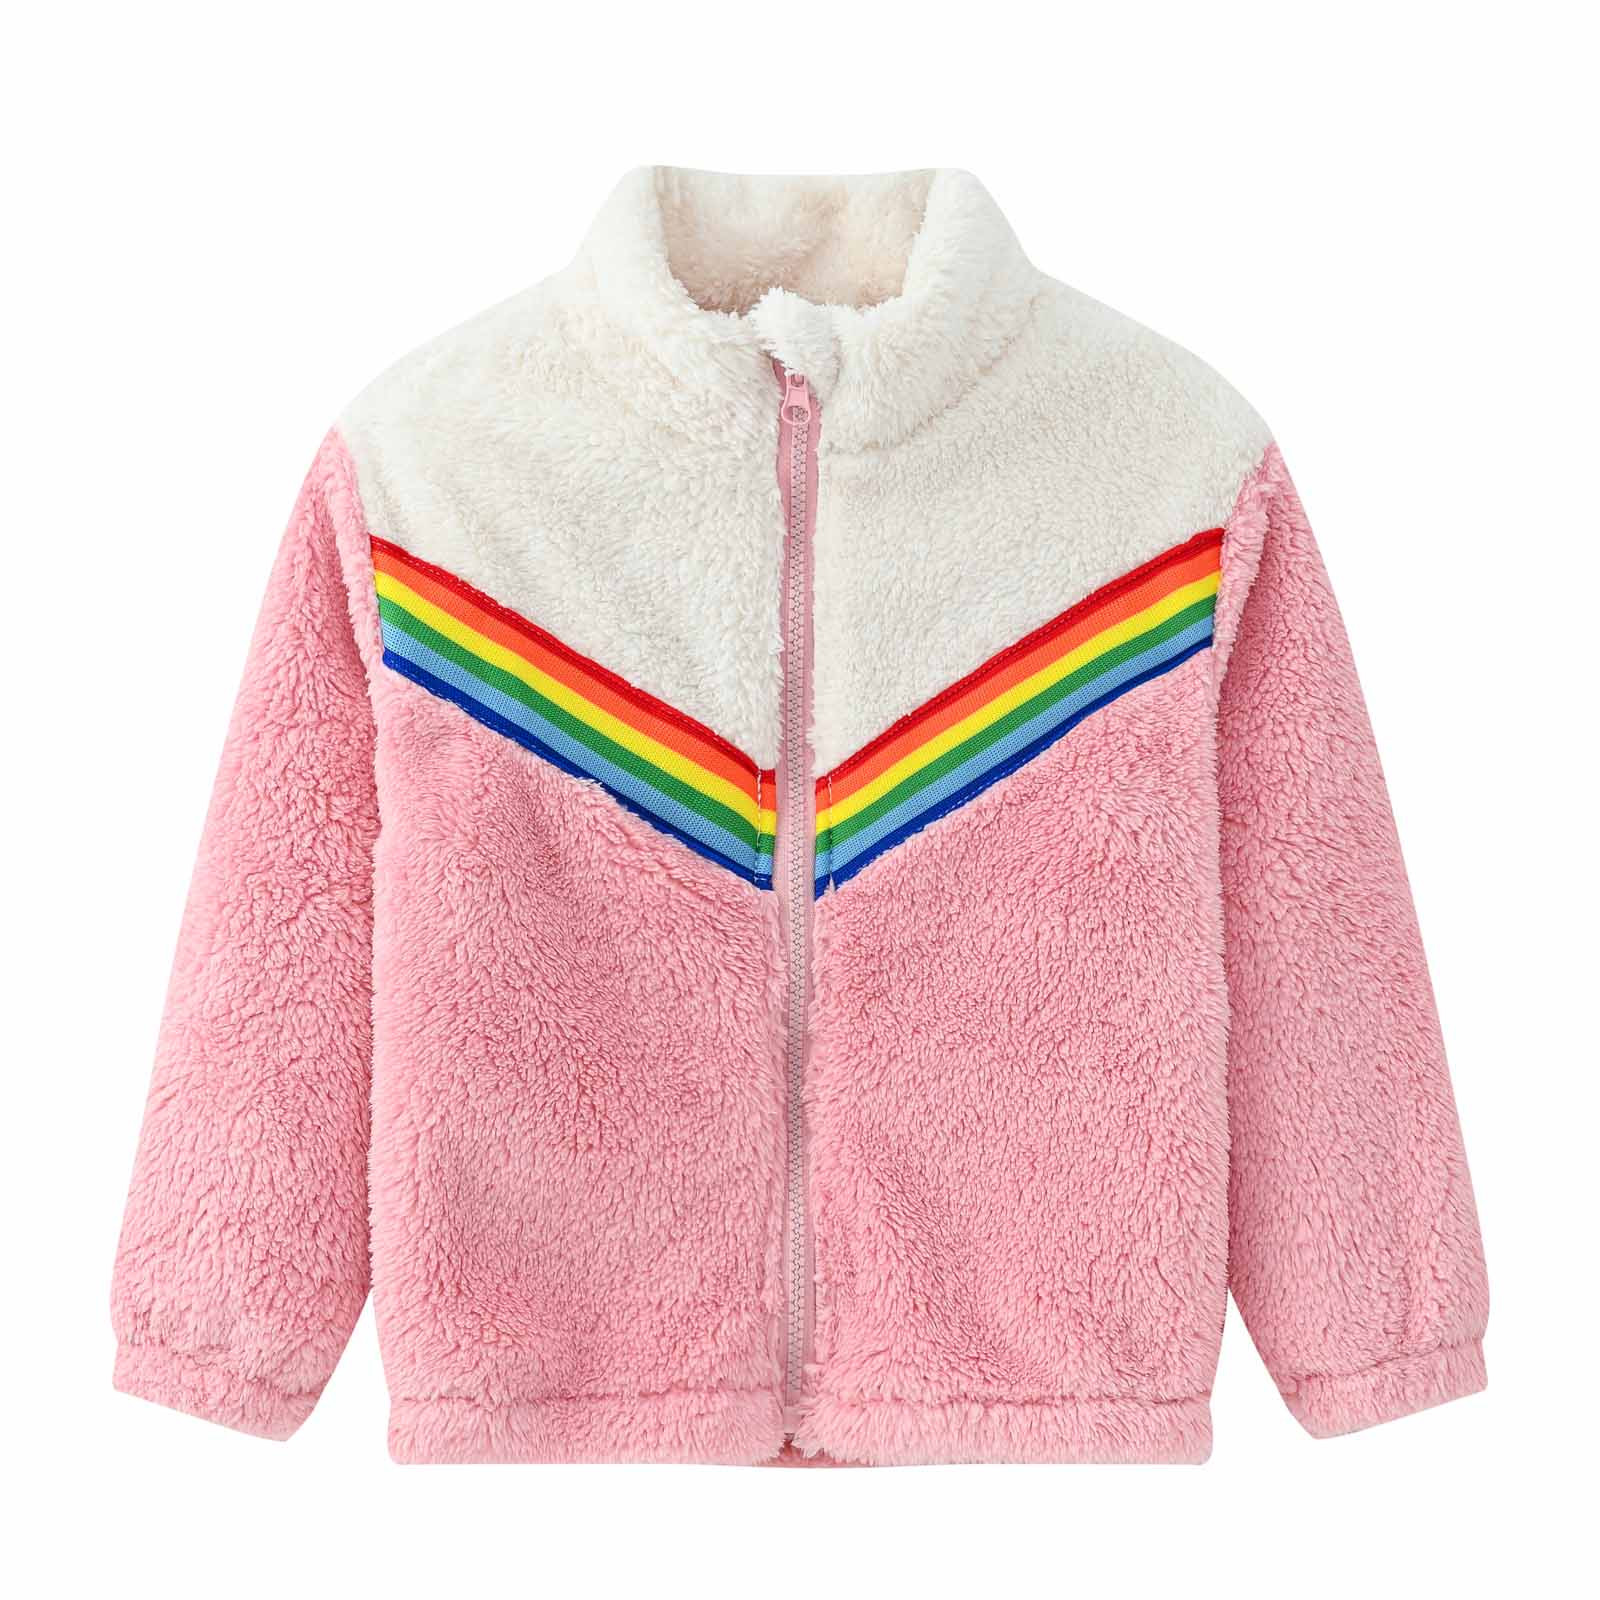 YYDGH Girls Zipper Jacket Fuzzy Sweatshirt Long Sleeve Casual Cozy Fleece Sherpa Outwear Coat Full-Zip Rainbow Jackets(Pink,3-4 Years) - image 1 of 8